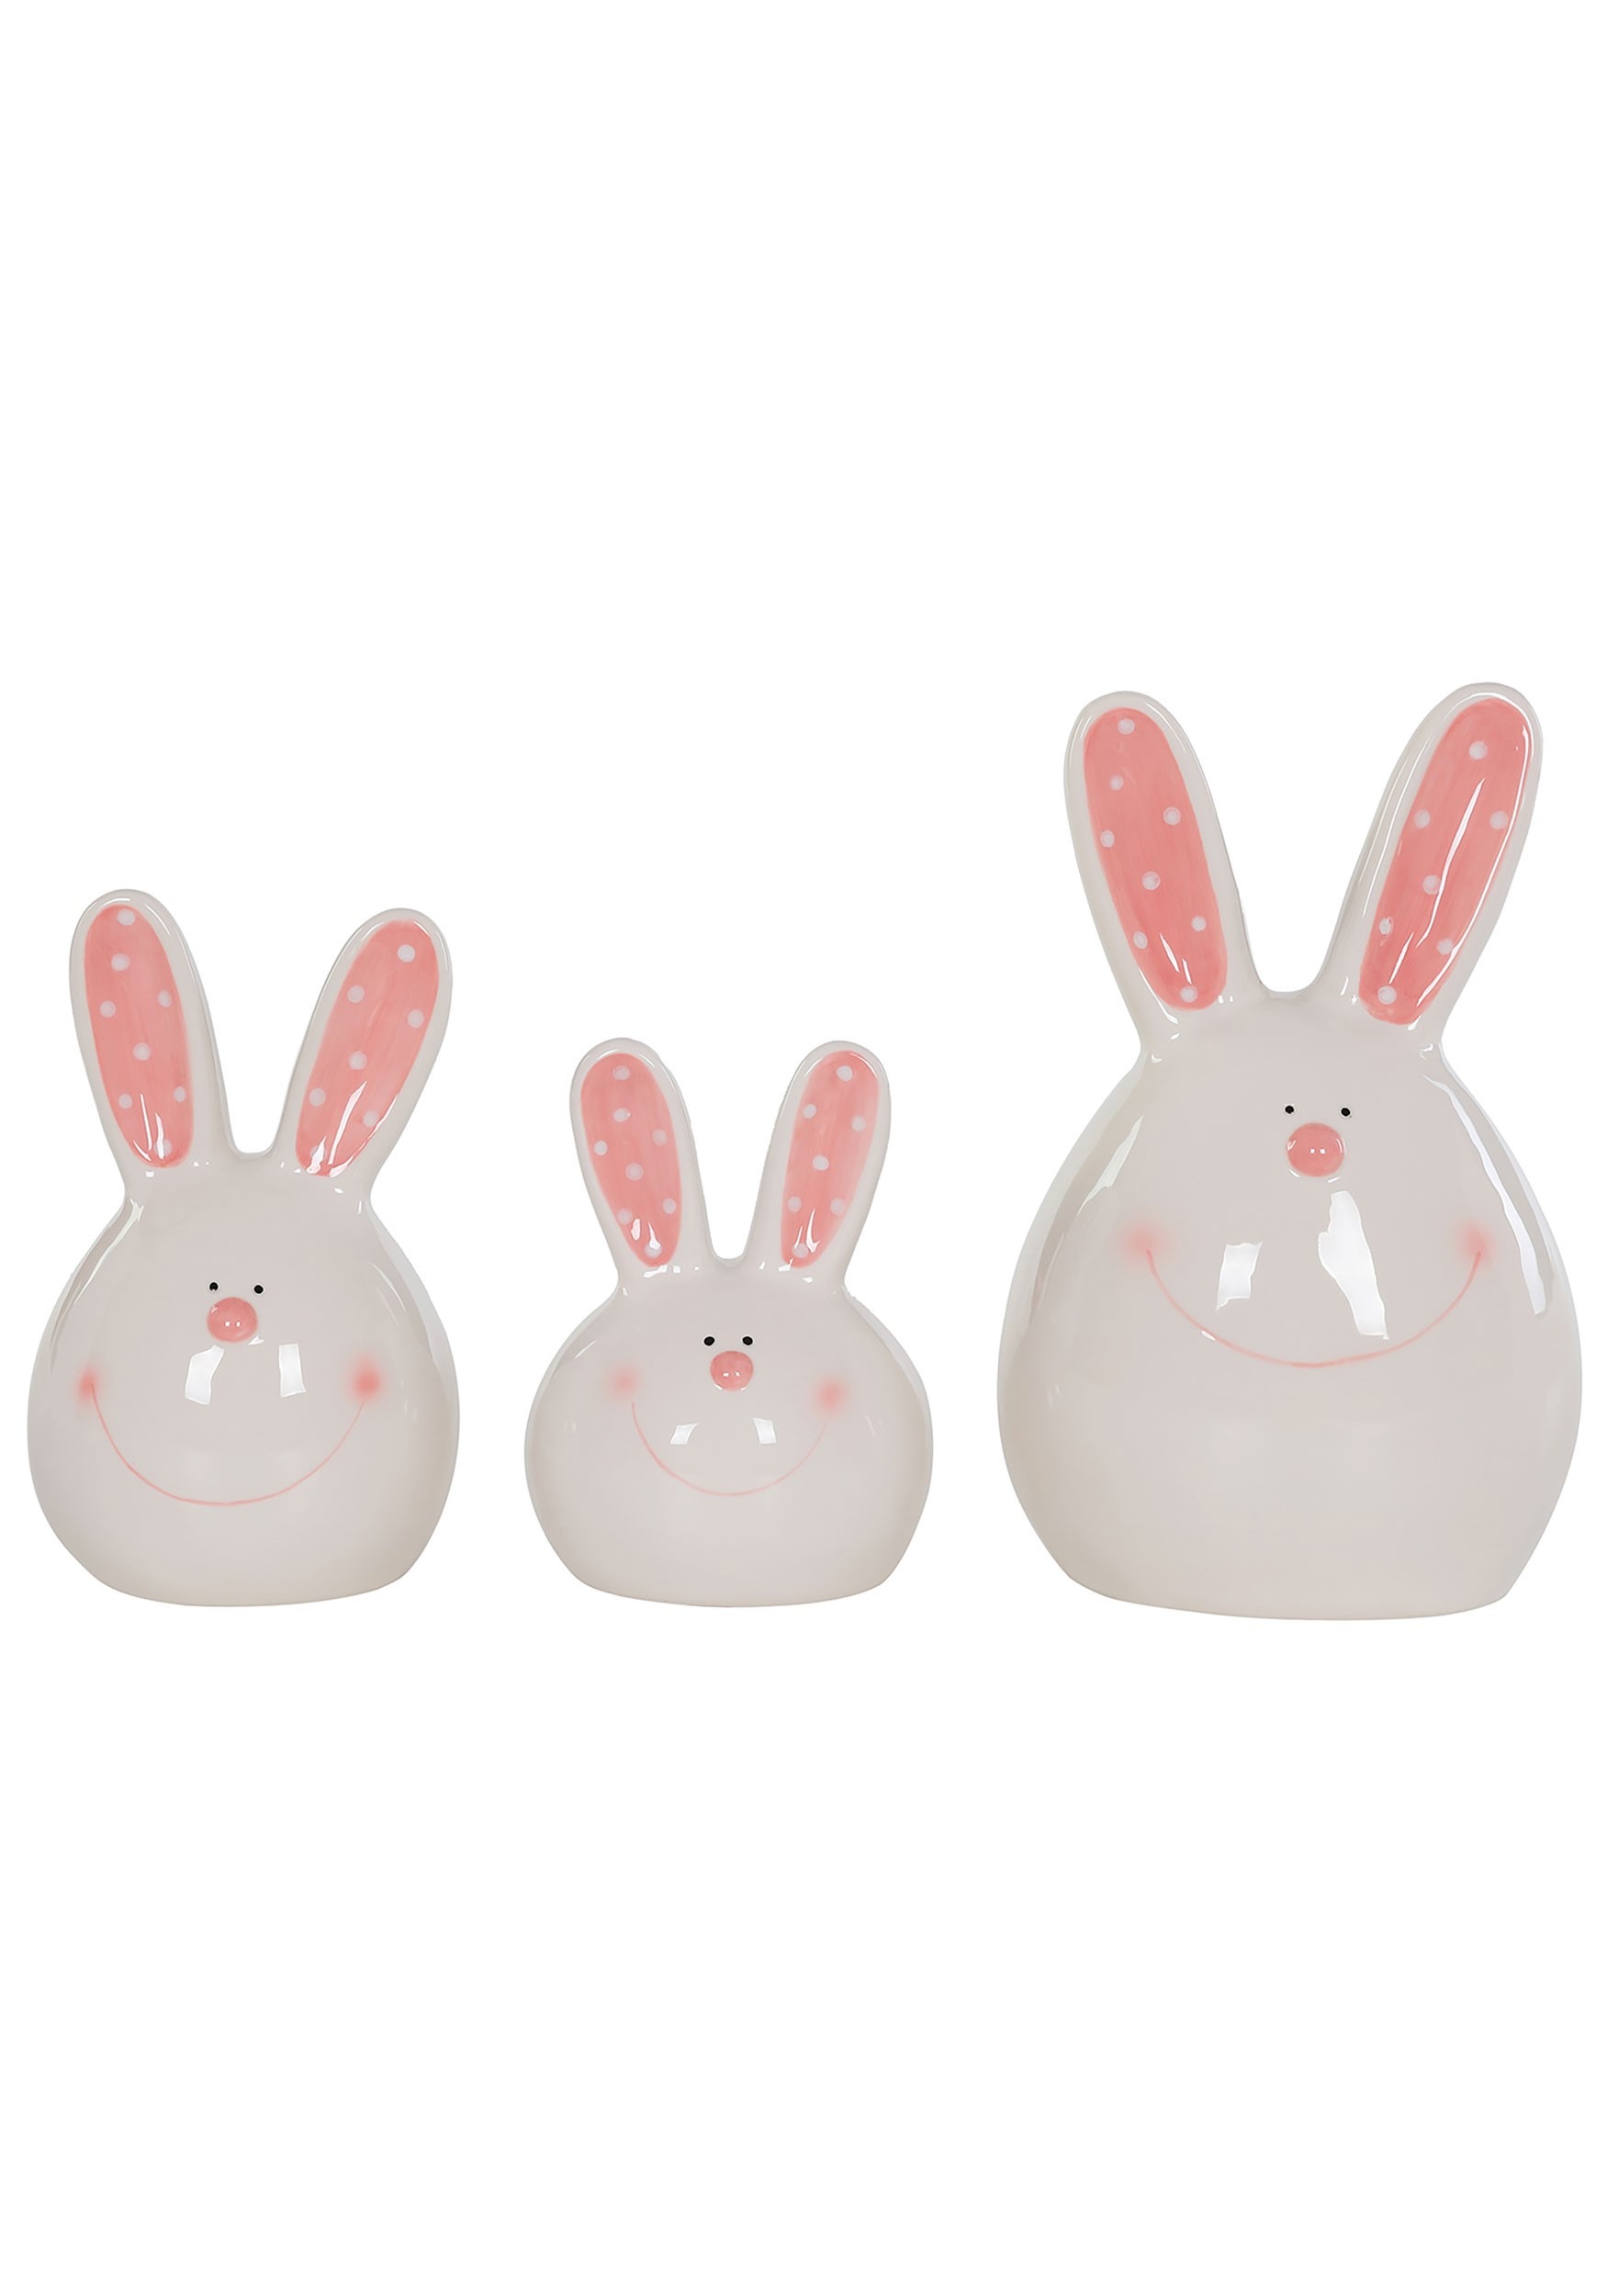 Ceramic Cheek Bunny Head Set of 3 Figurines